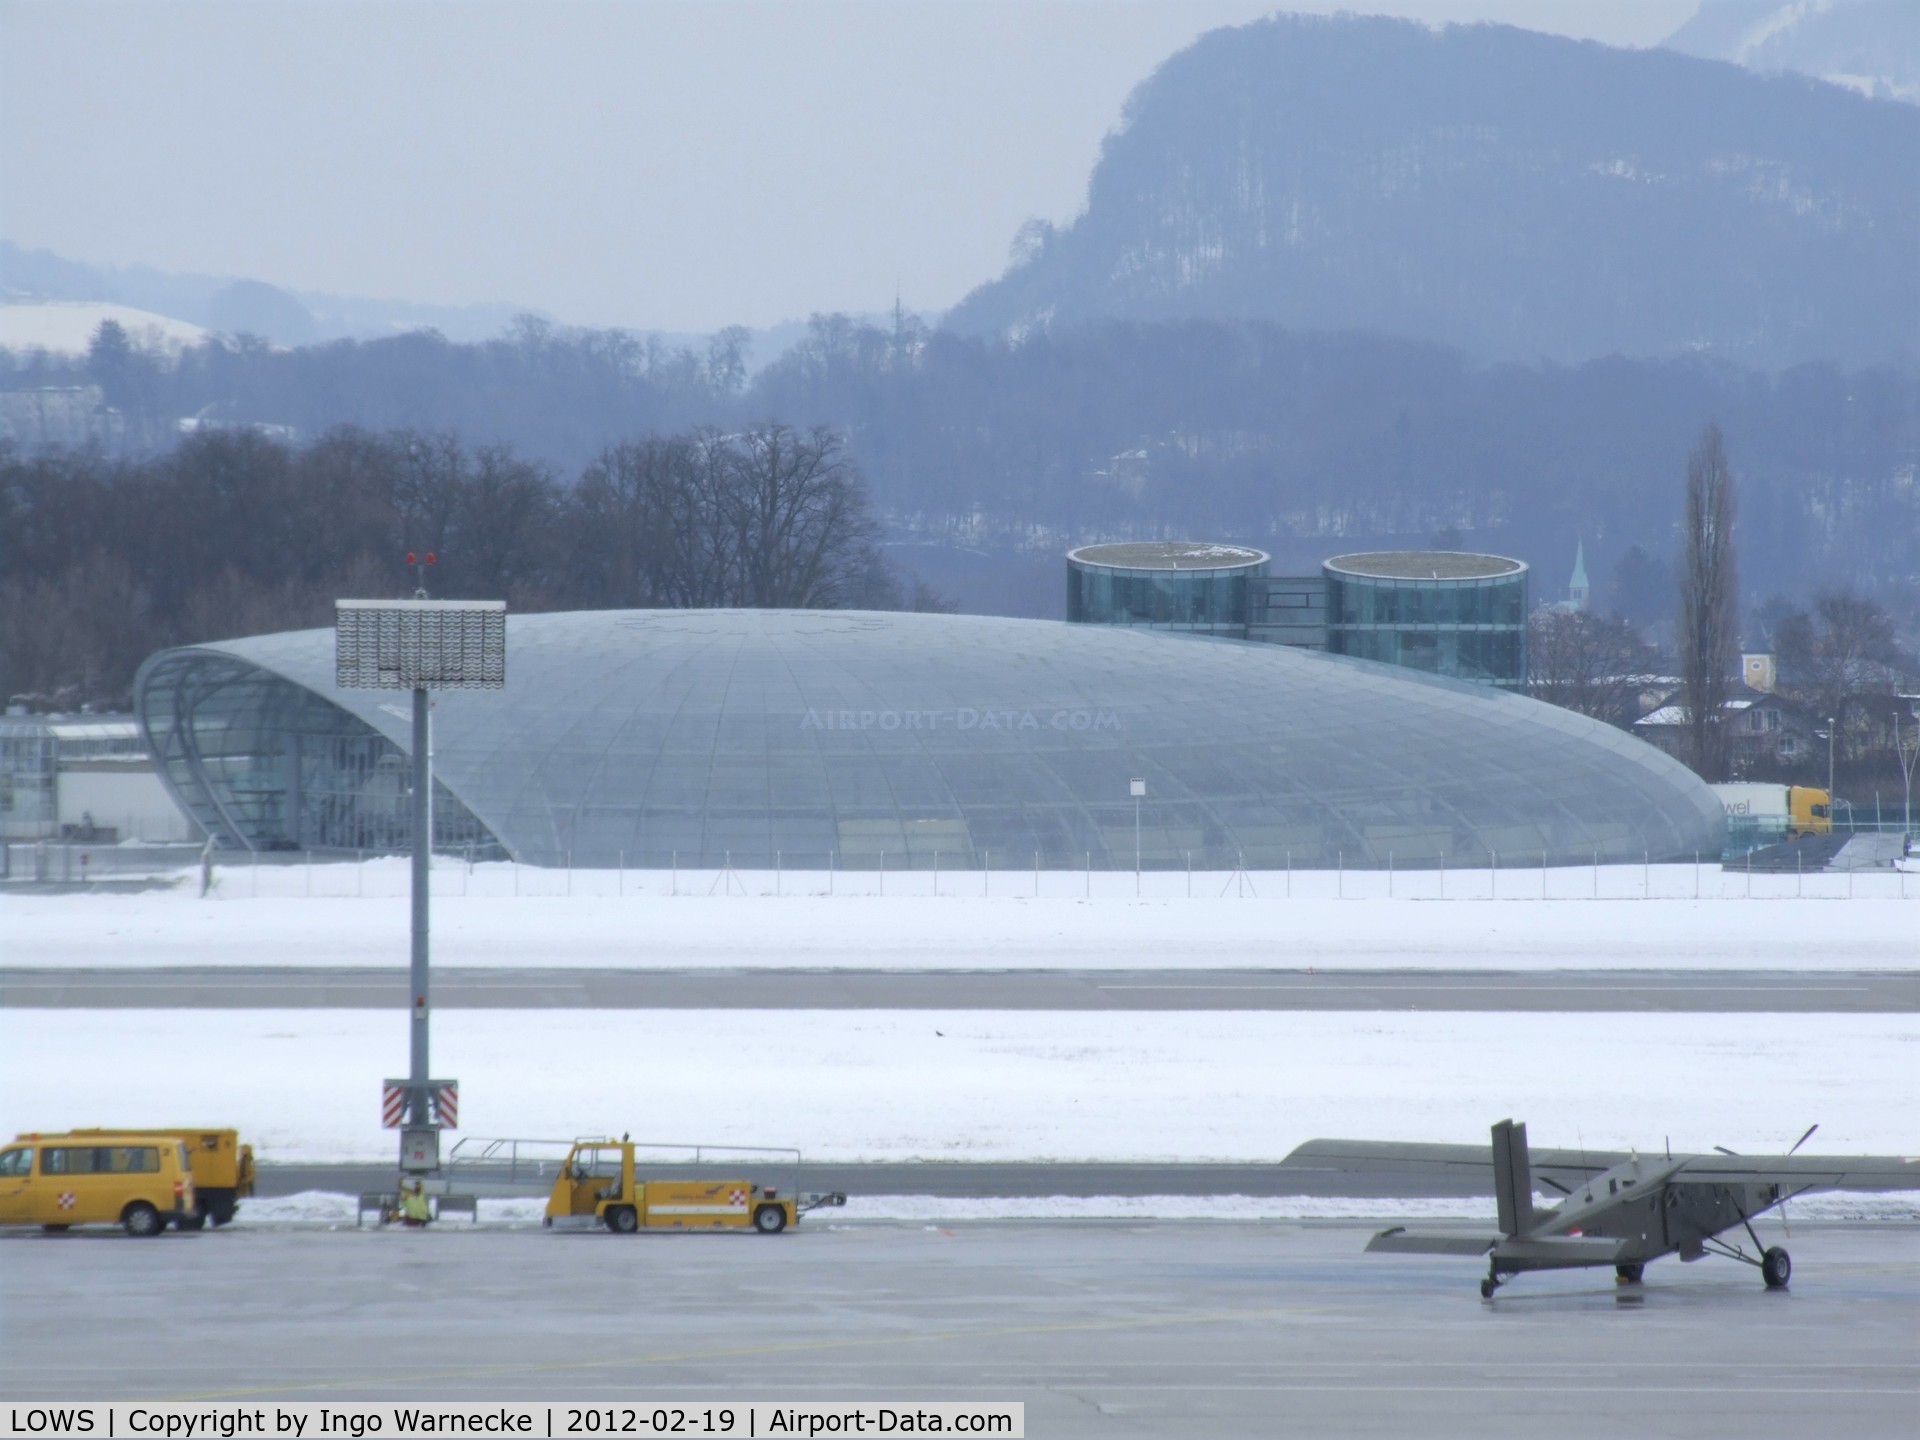 Salzburg Airport, Salzburg Austria (LOWS) - Hangar 7, home of the Red-Bull aircraft collection at Salzburg W.A.Mozart airport